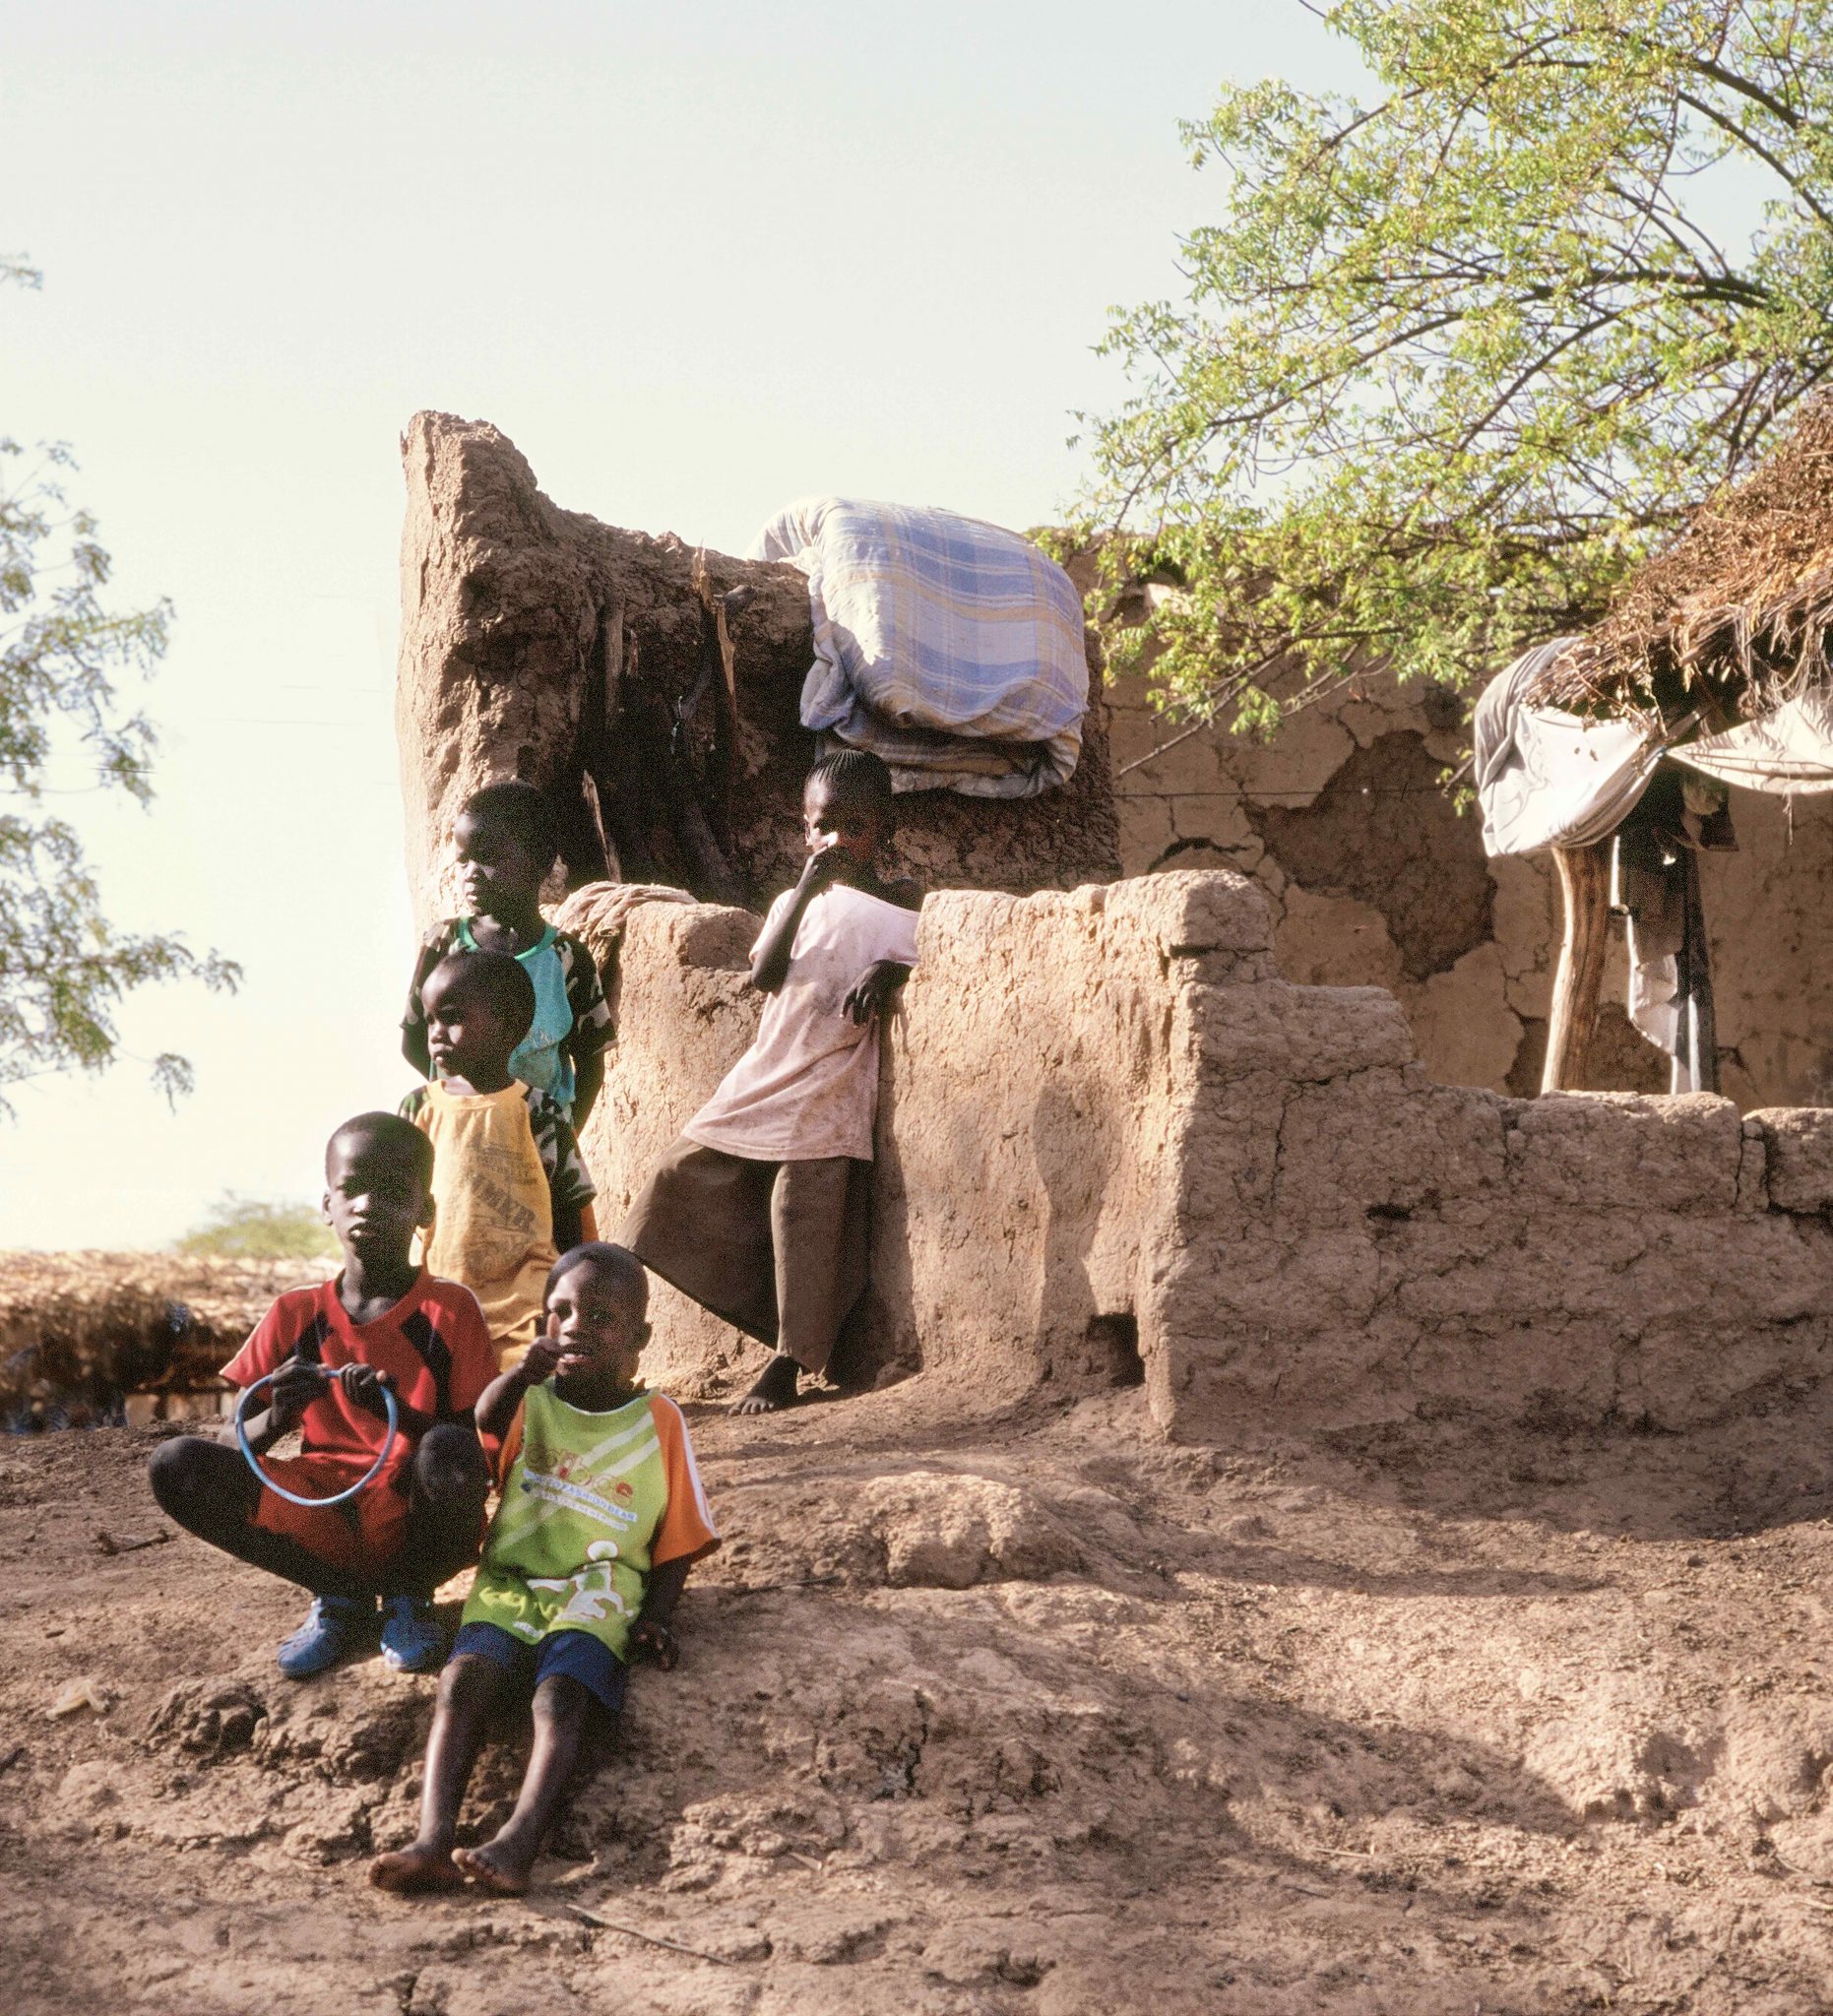 Five Children, Raphael, Senegal